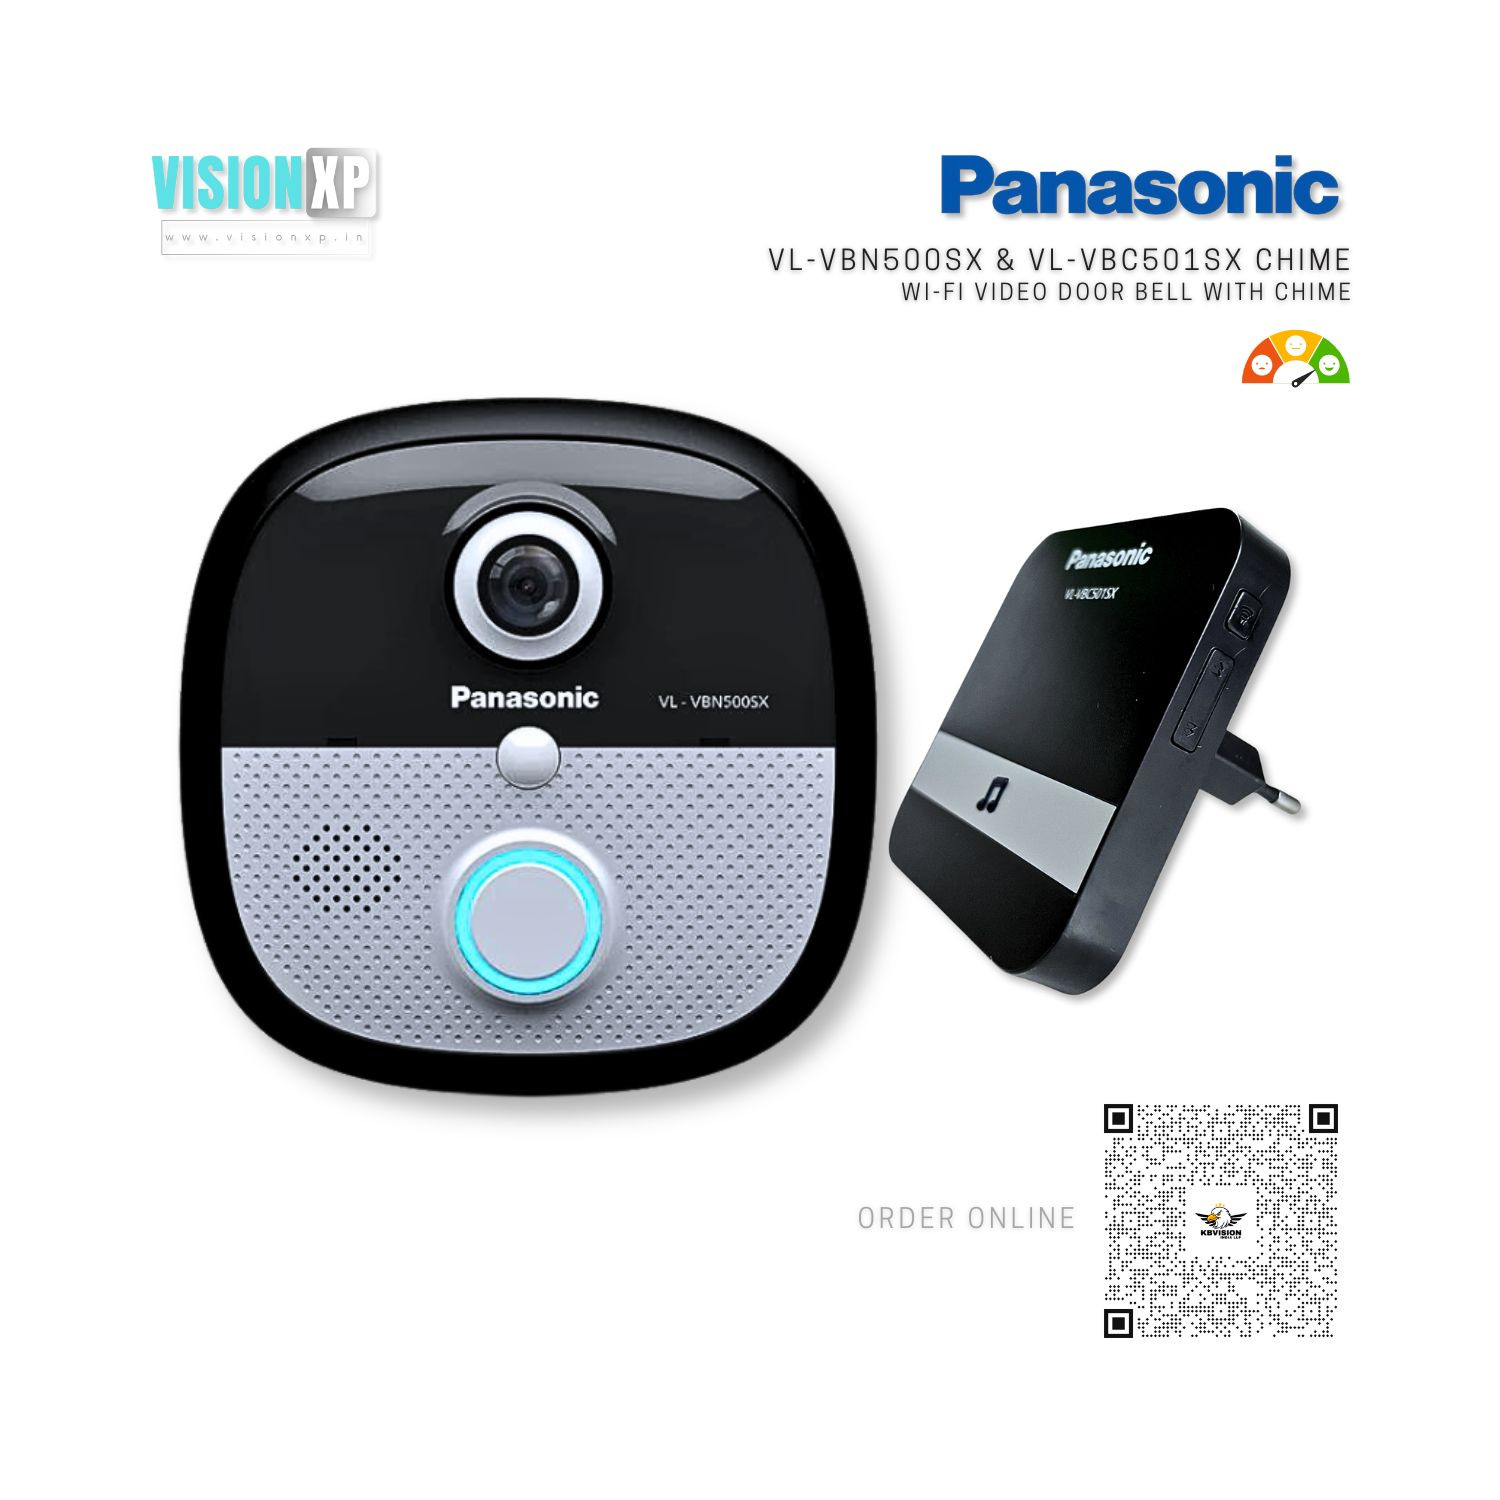 Panasonic VL-VBN500SX WiFi Video Door Bell with VL-VBC501SX Chime